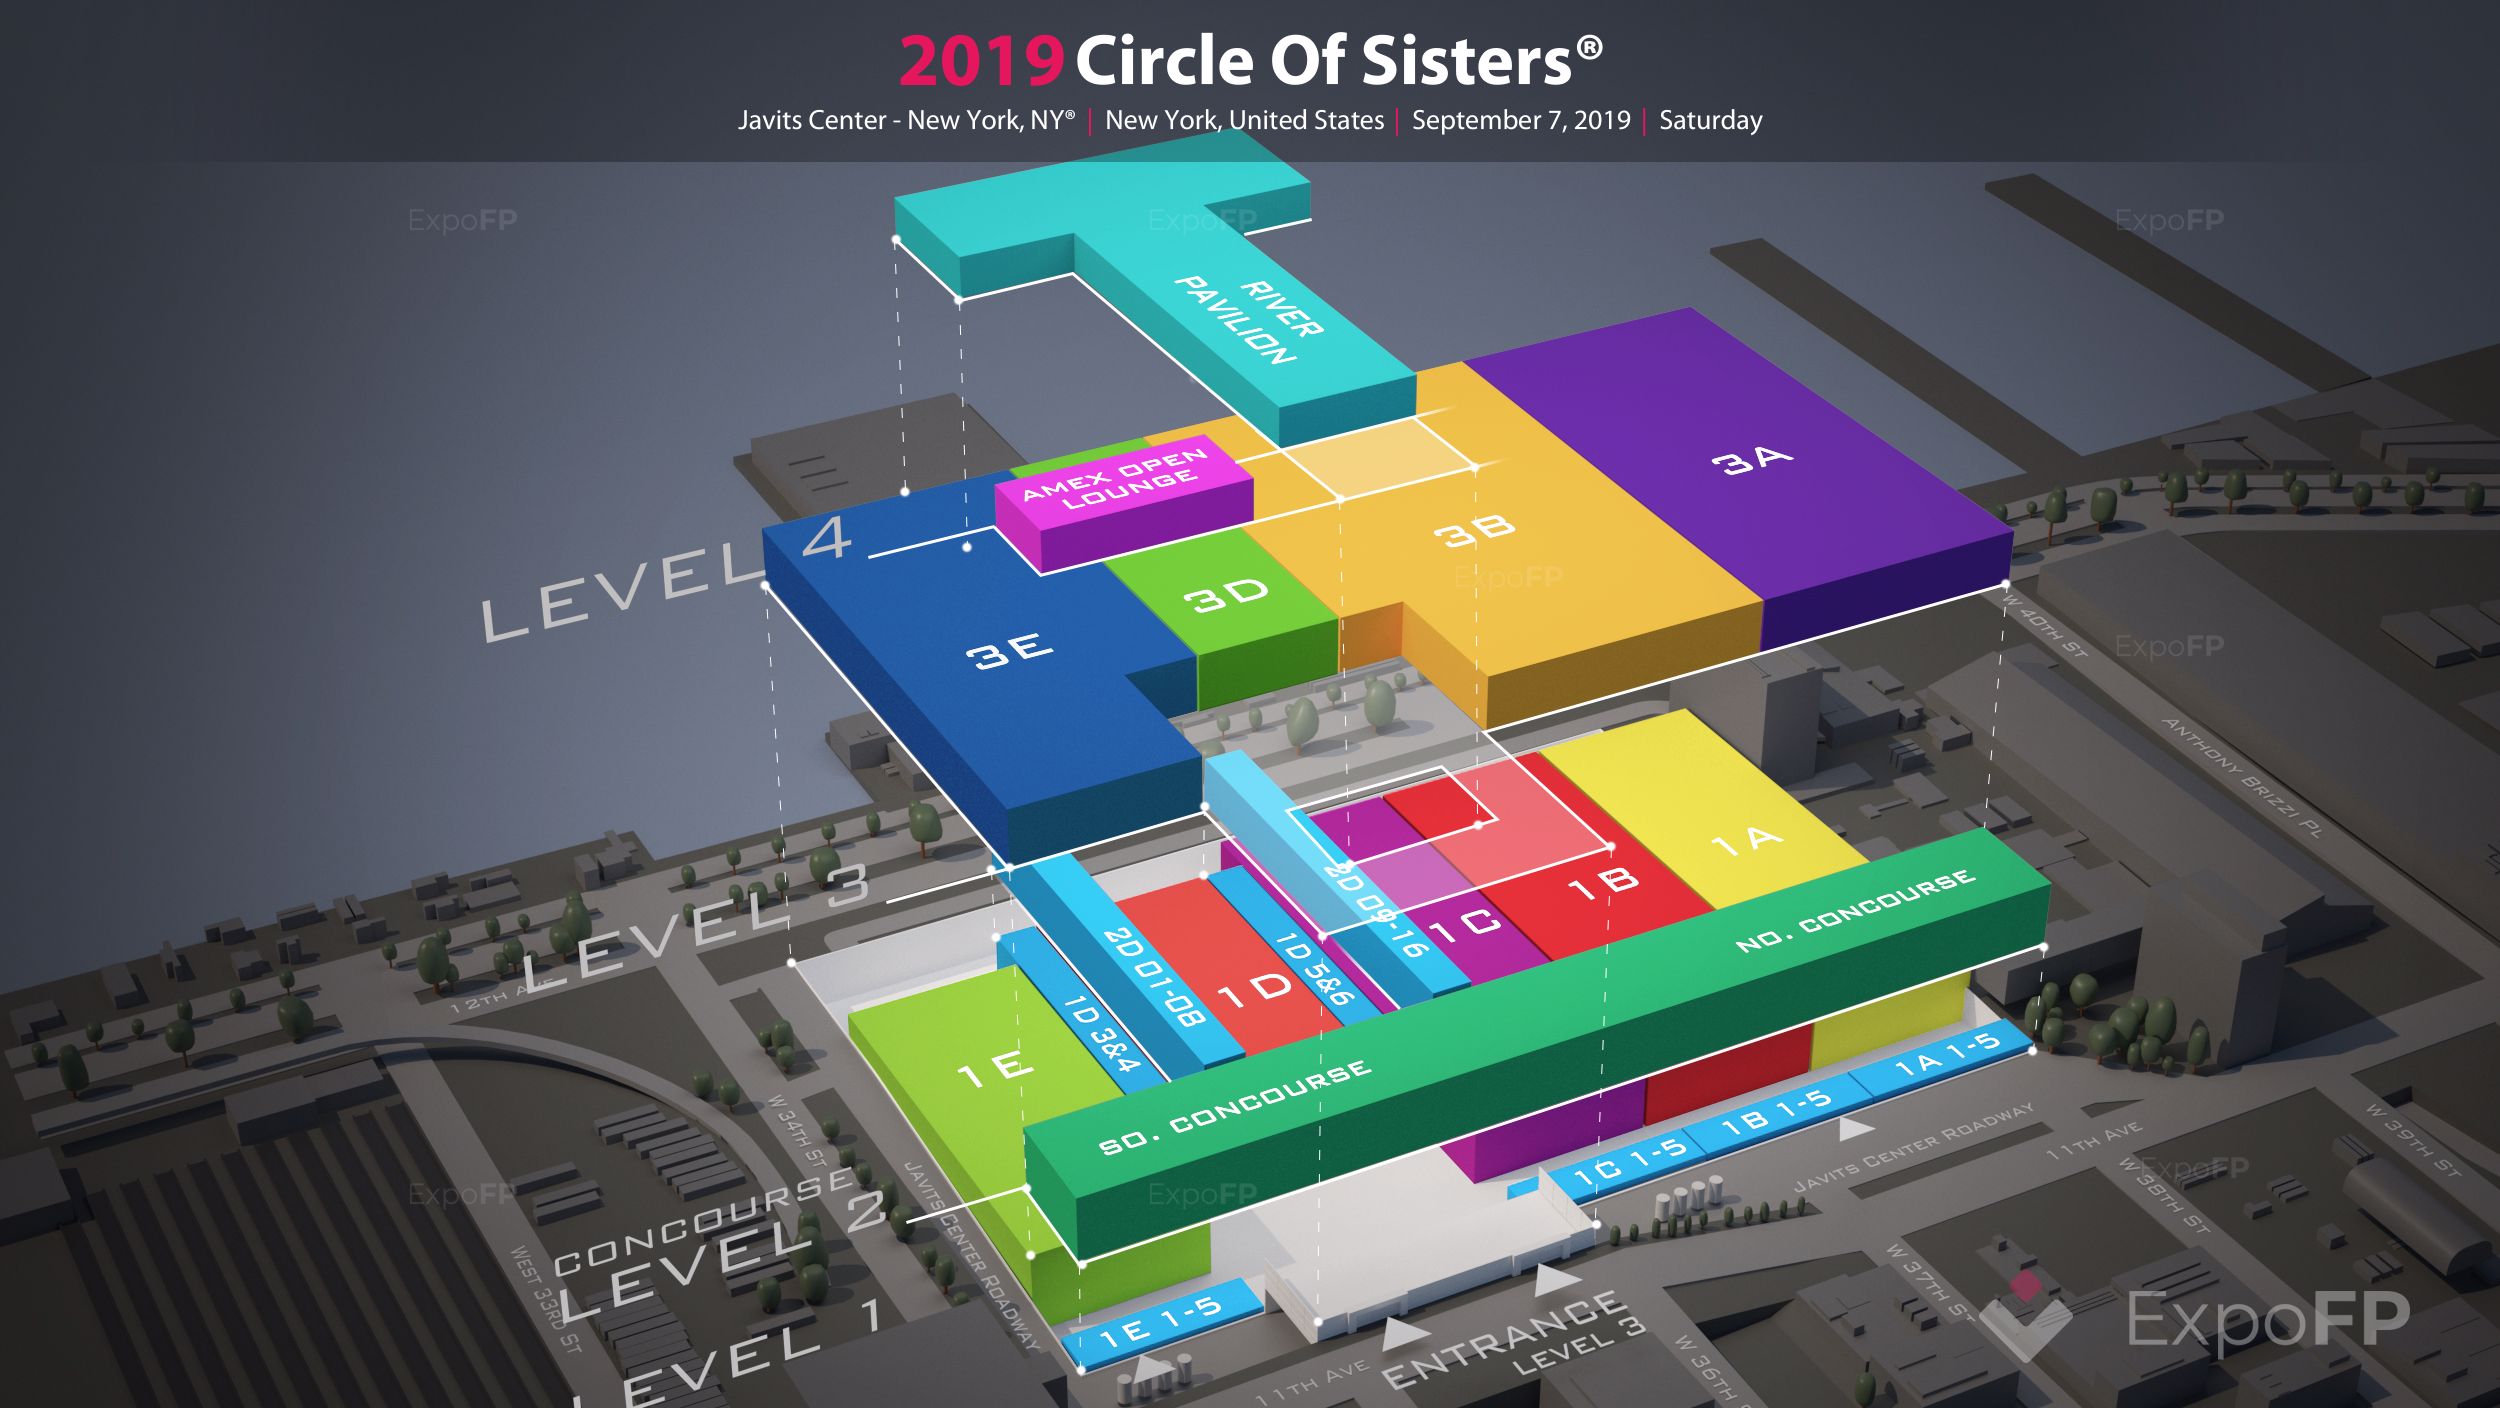 Circle of Sisters 2019 in Javits Center New York, NY